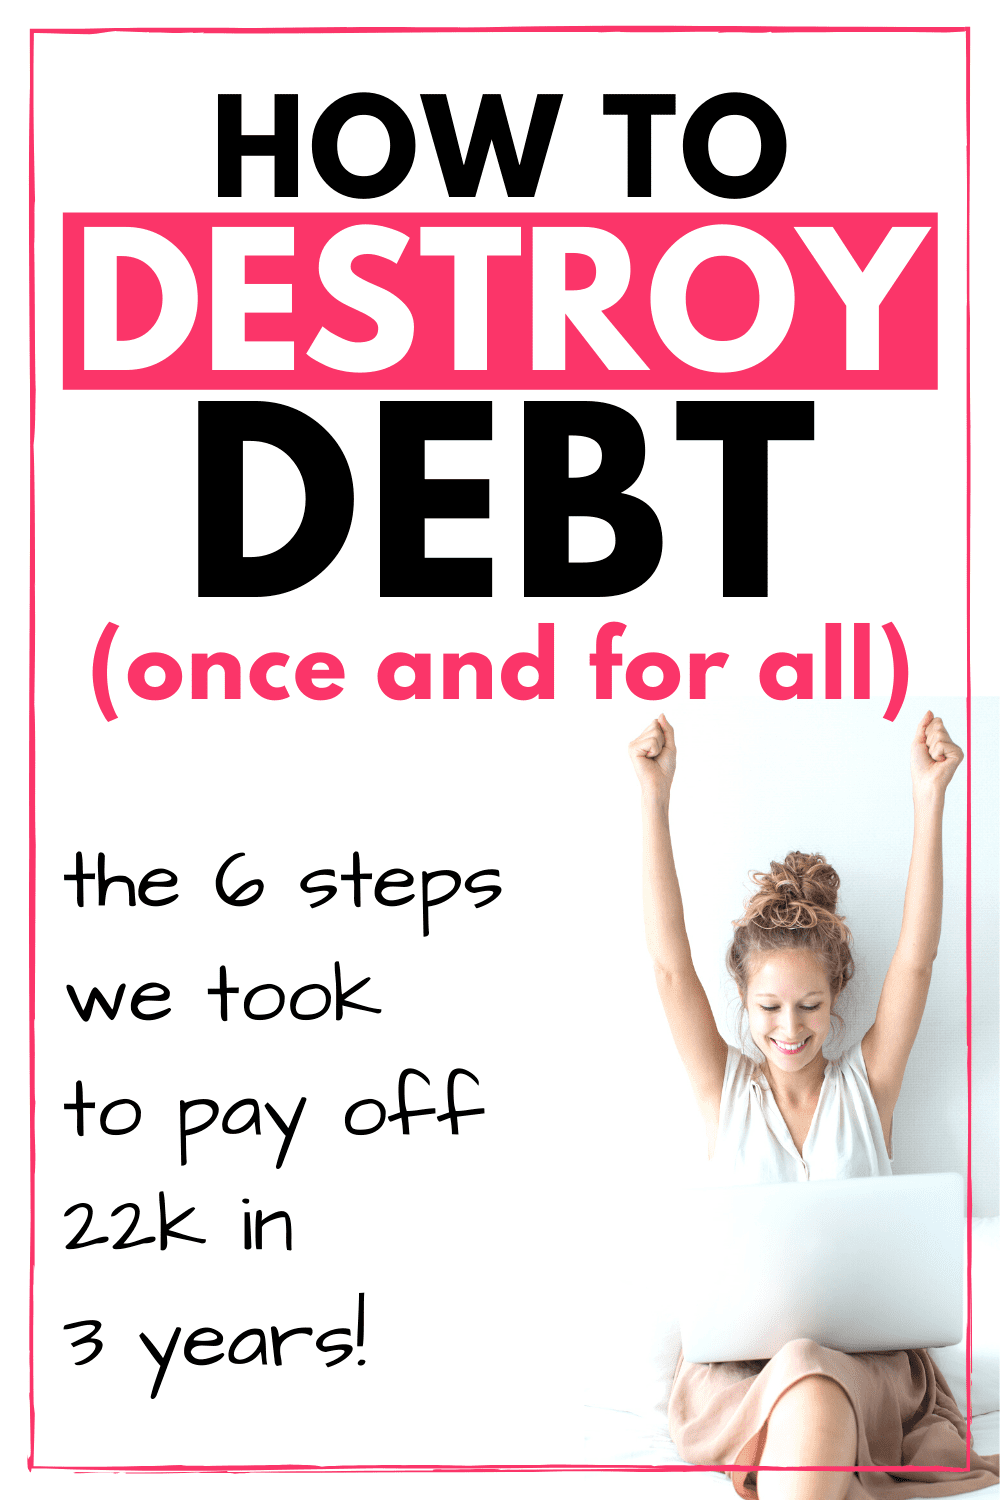 How to destroy debt 